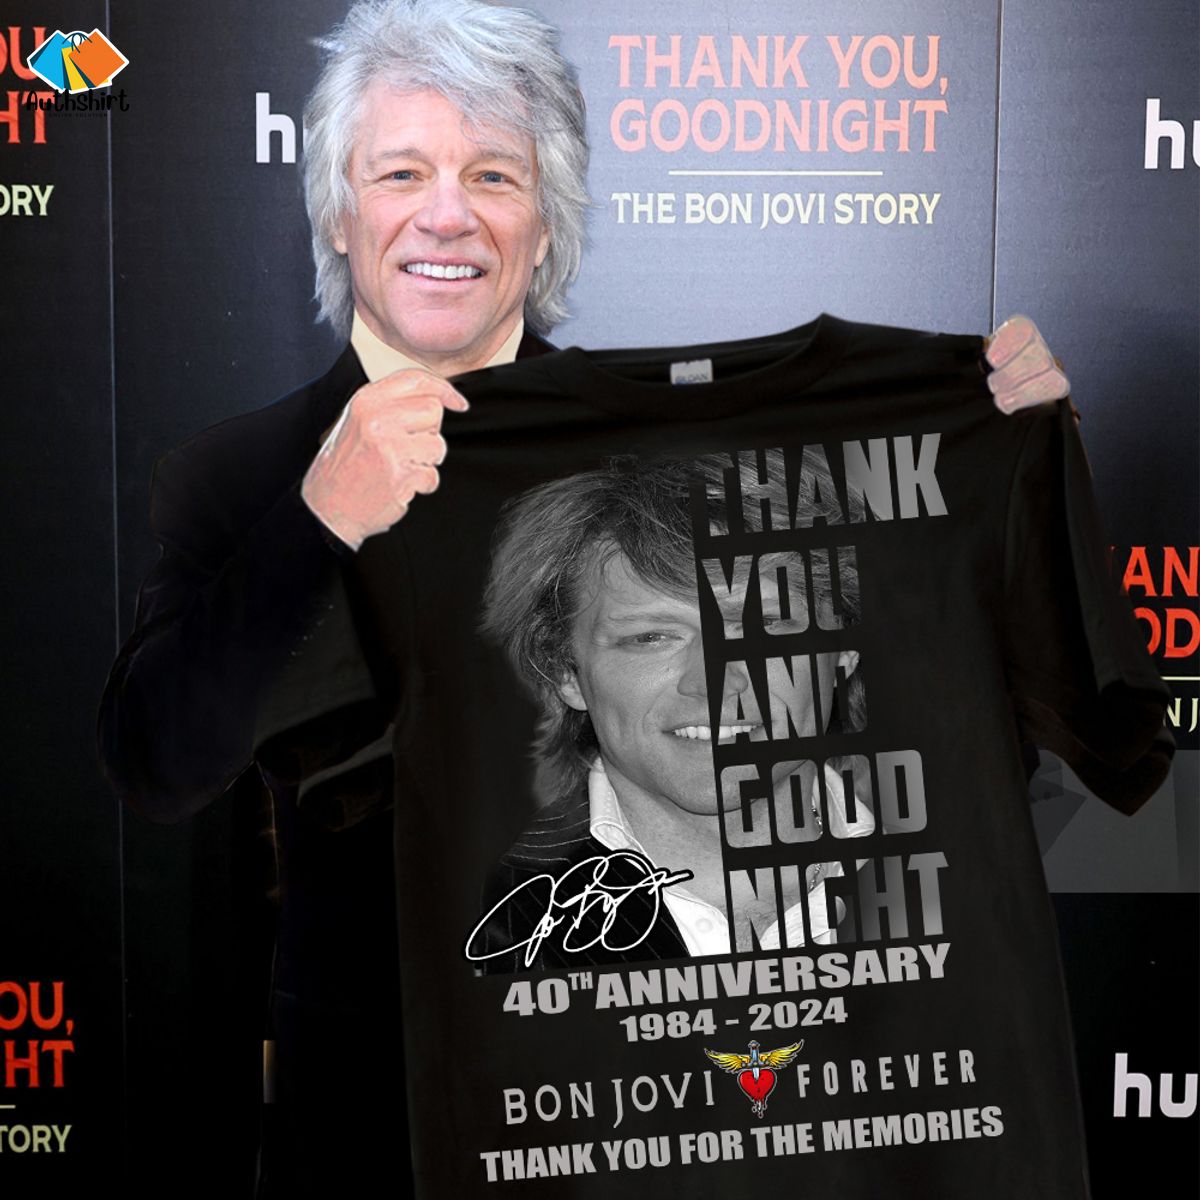 Bon Jovi Forever thank you and goodnight 40th anniversary shirt